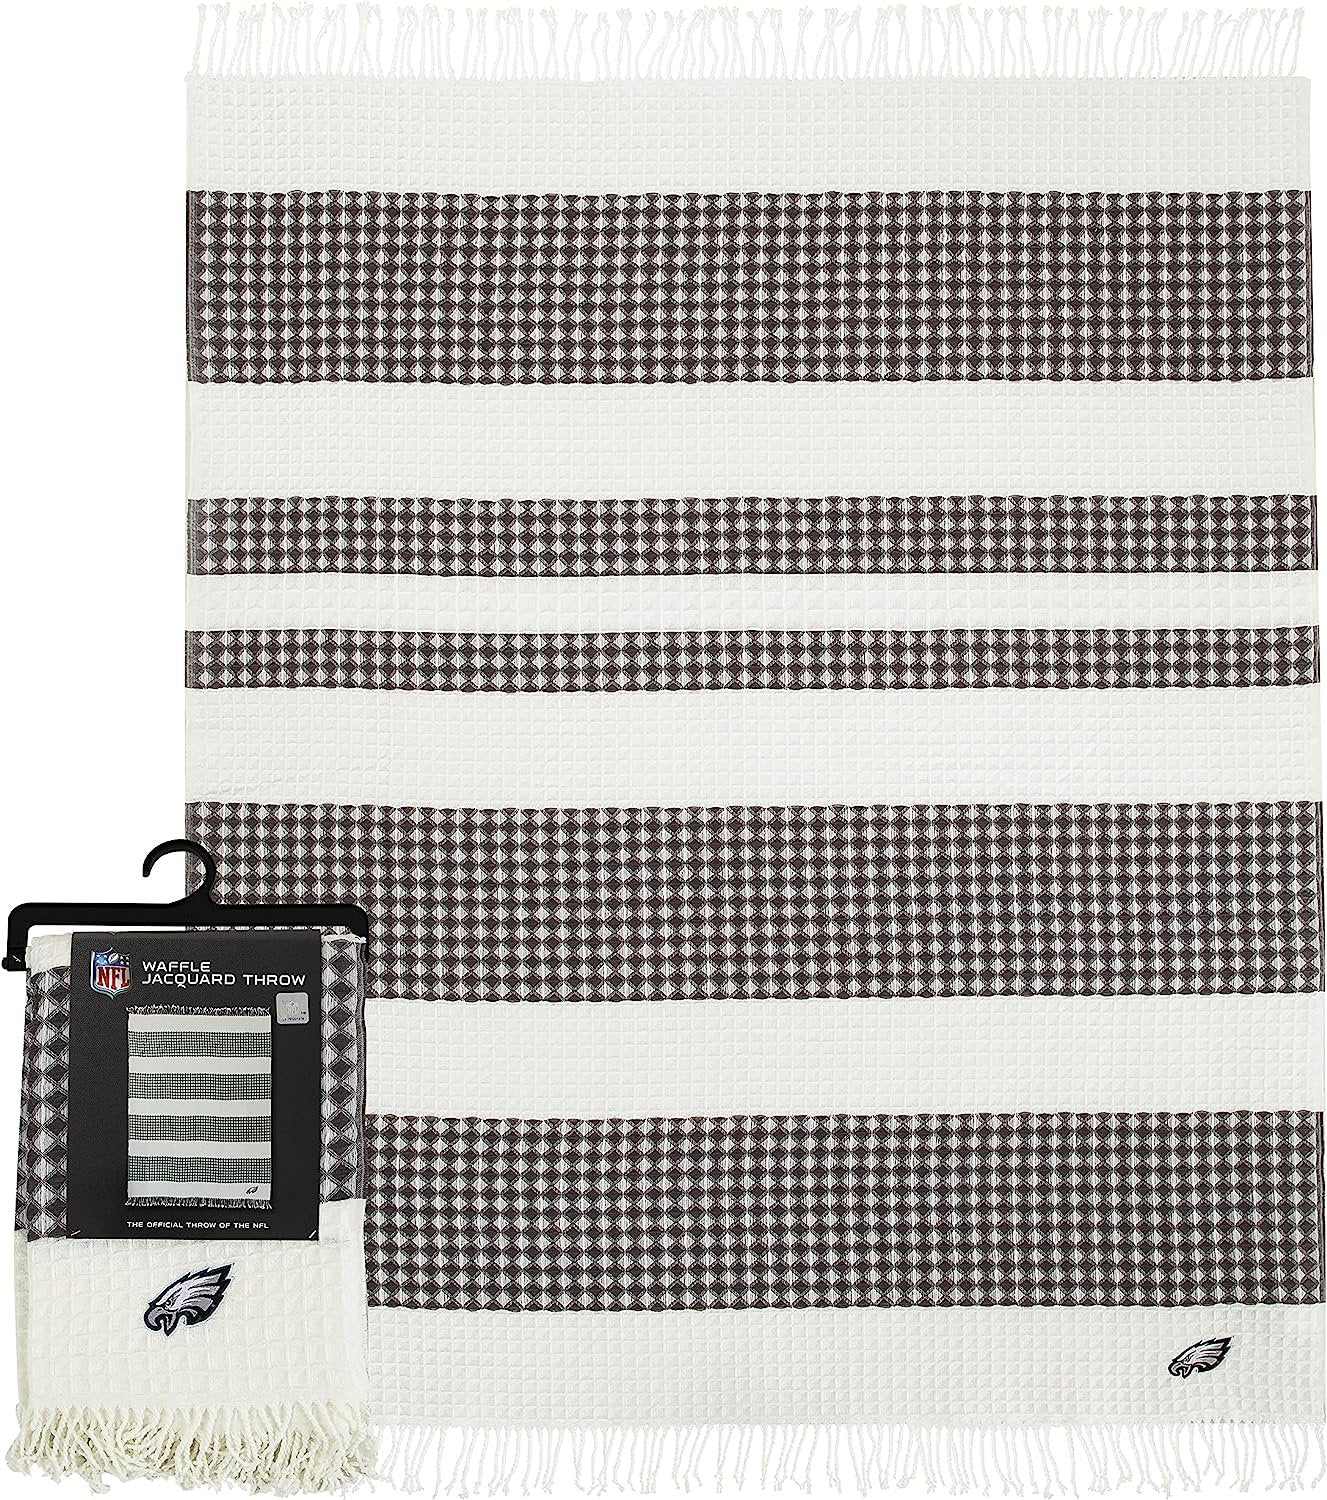 Philadelphia Eagles Throw Blanket Waffle Weave Jacquard, 50x60 Inch, Unisex-Adult, 100% Acrylic